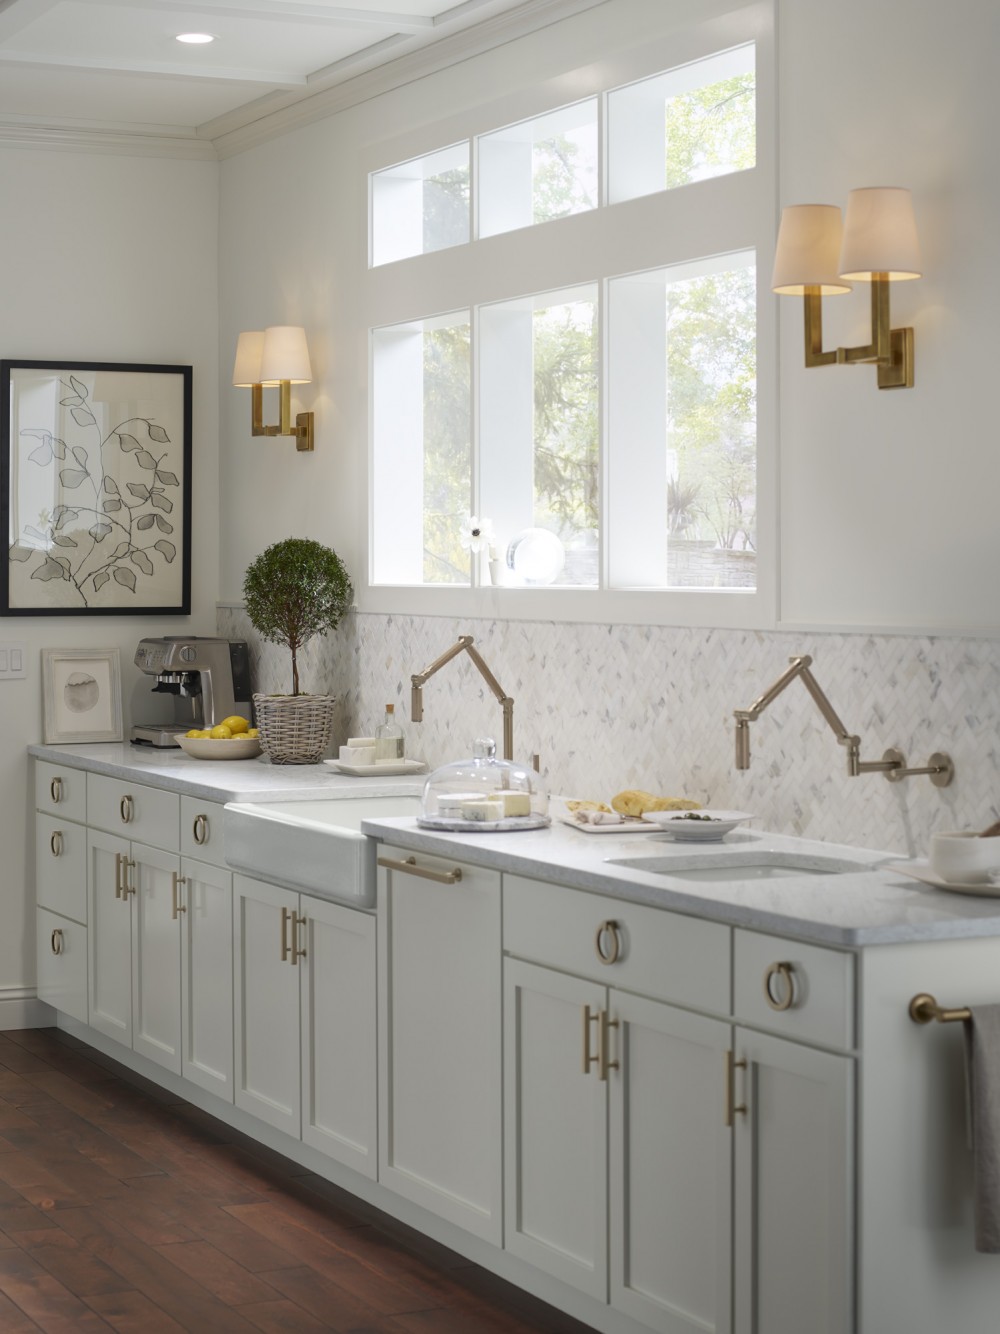 Sink For Quartz Countertops, How To Choose The Right White Quartz For Kitchen Countertops